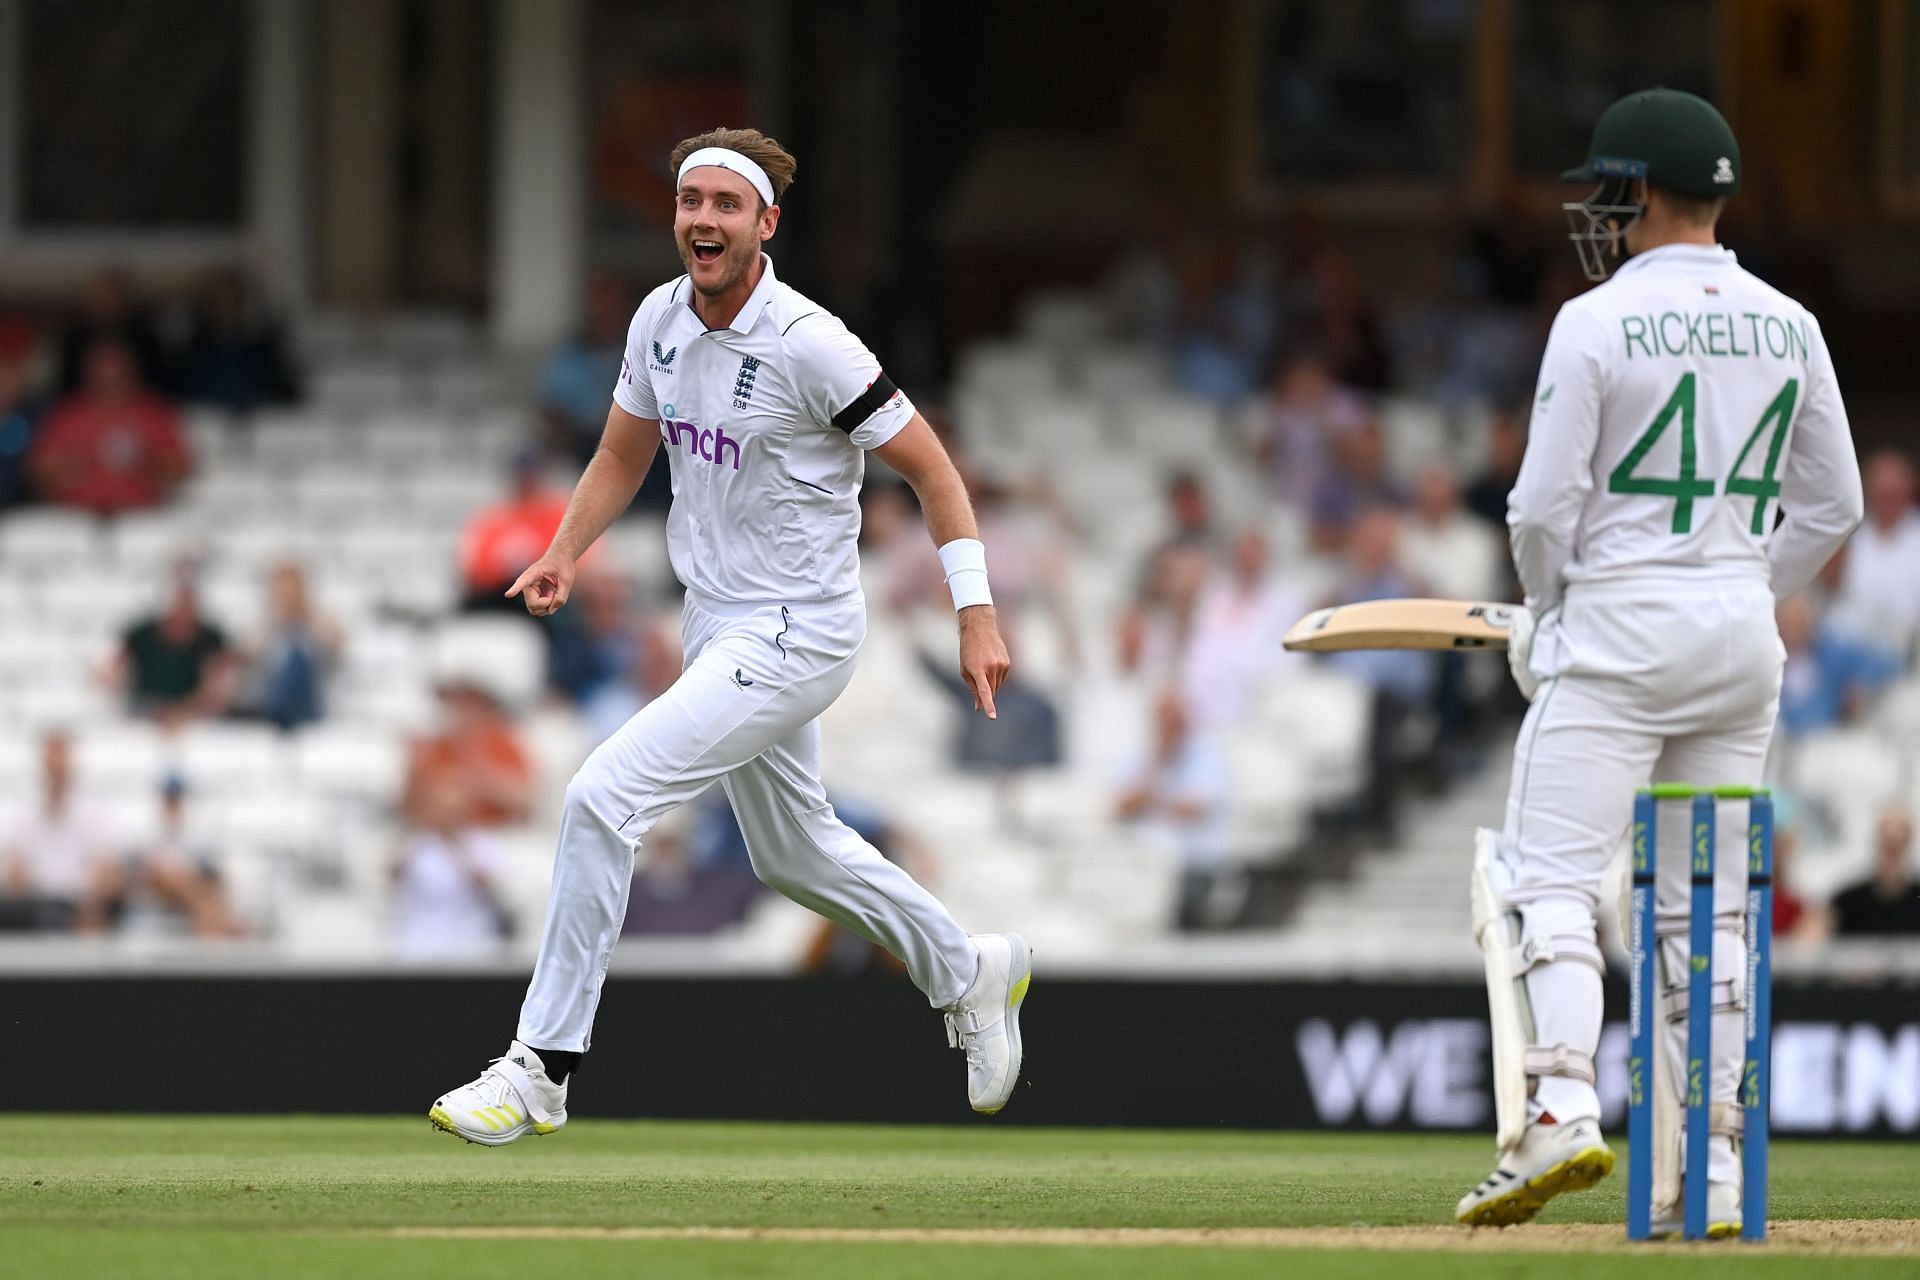 Stuart Broad celebrates Ryan Rickleton&#039;s wicket. (Credits: Getty)